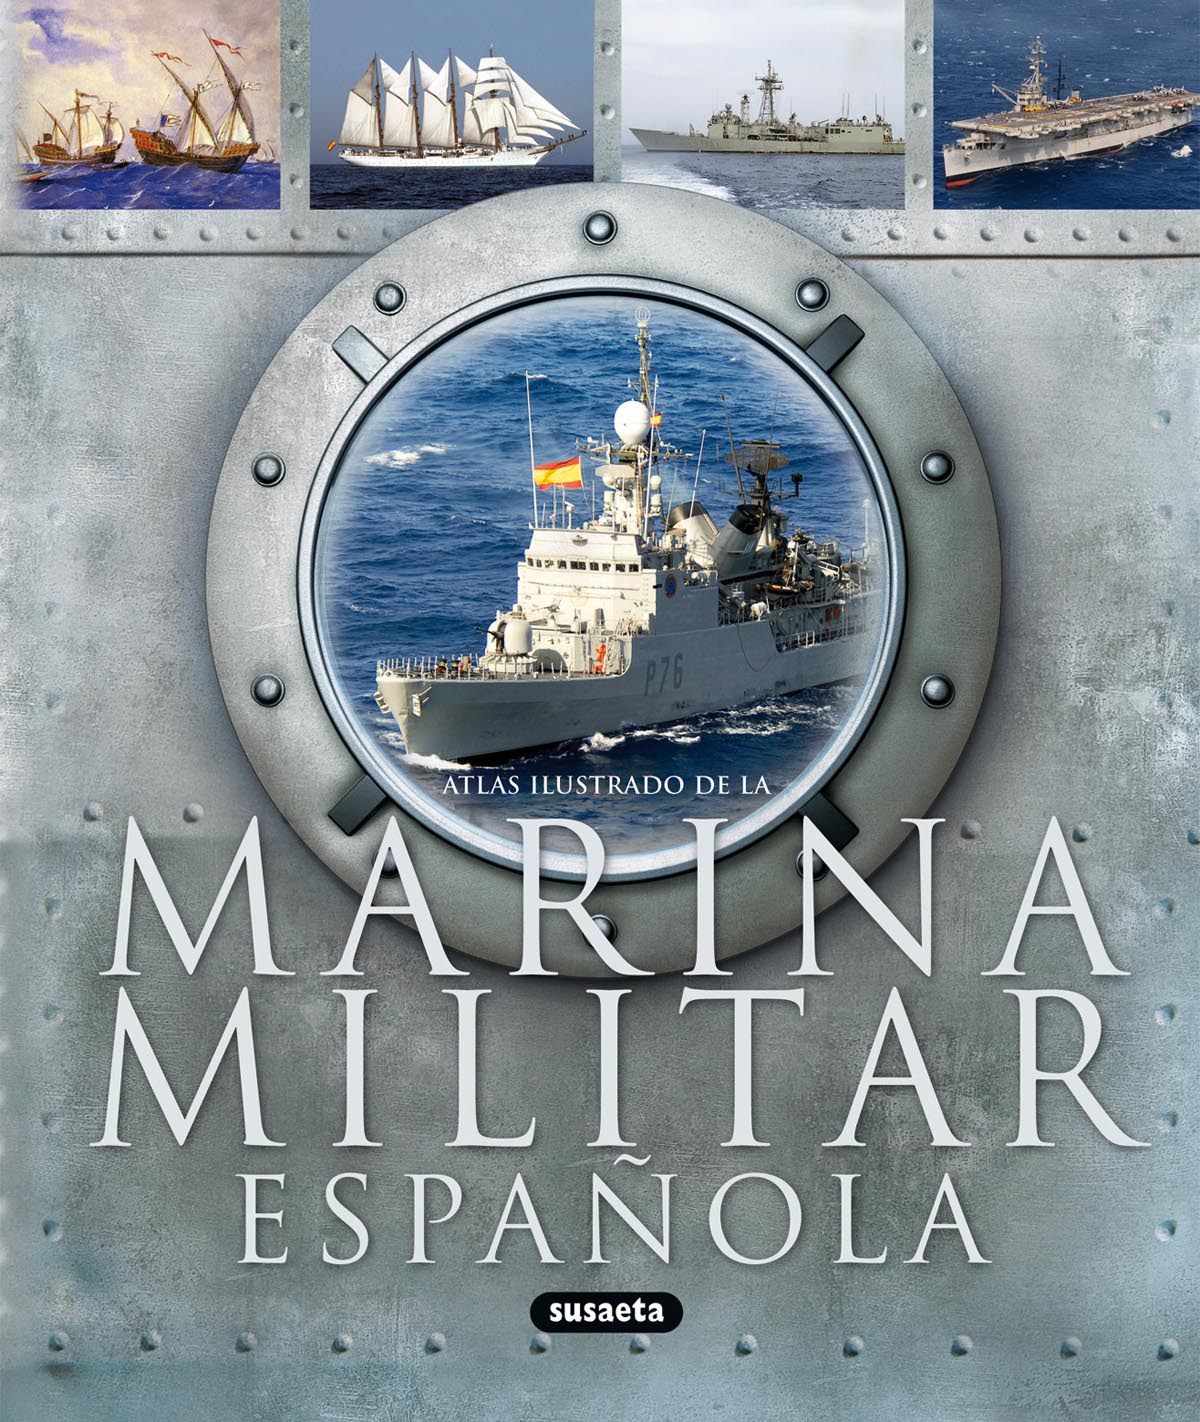 La Marina militar española